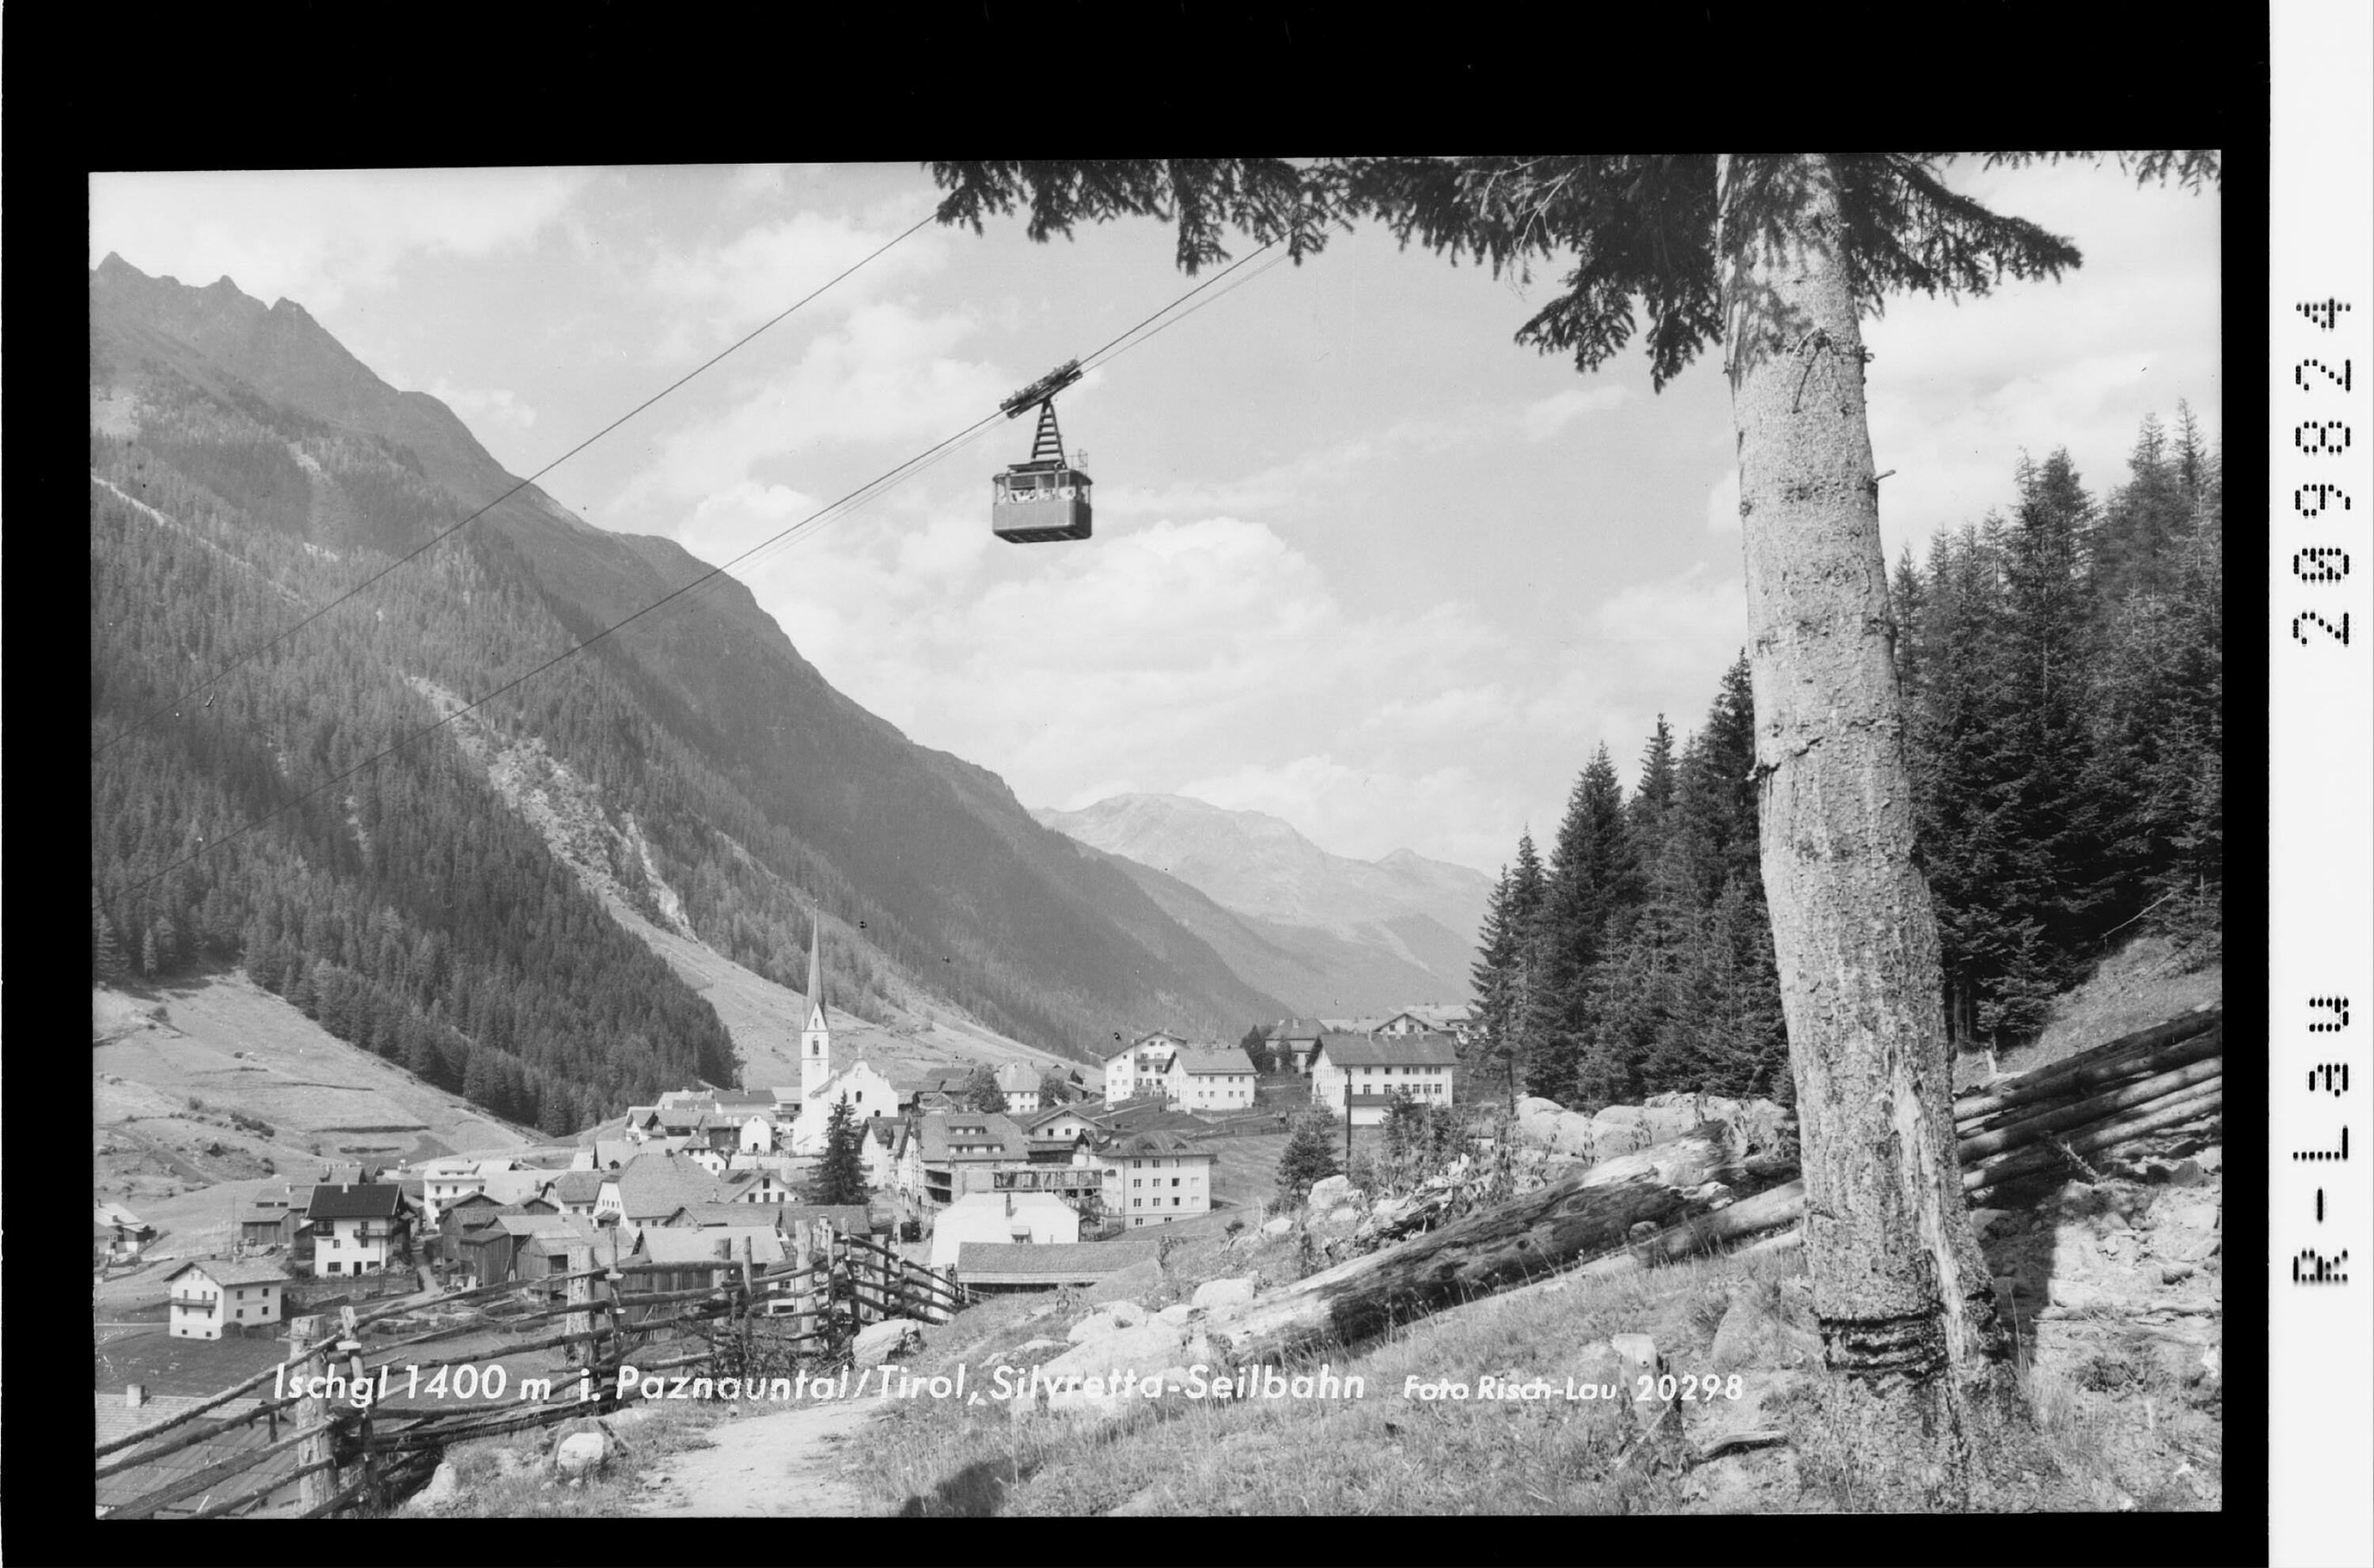 Ischgl 1400 m im Paznauntal / Tirol, Silvretta - Seilbahn></div>


    <hr>
    <div class=